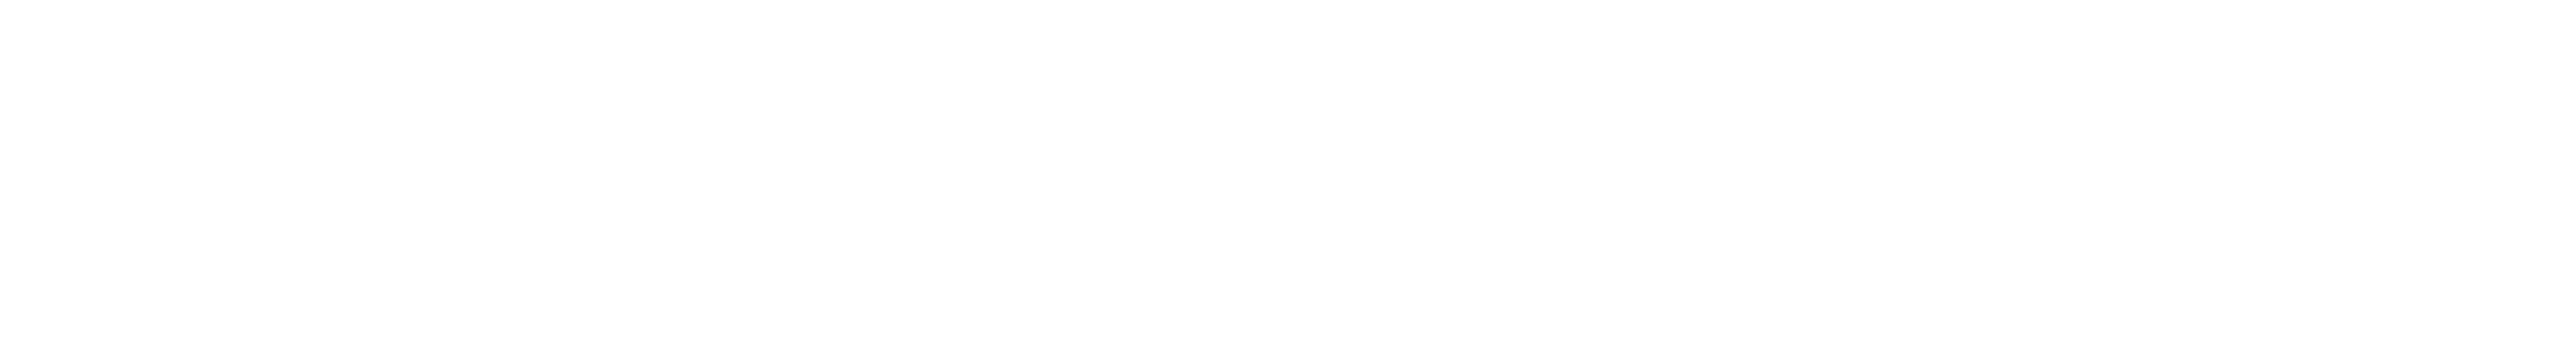 Operation Avalanche logo